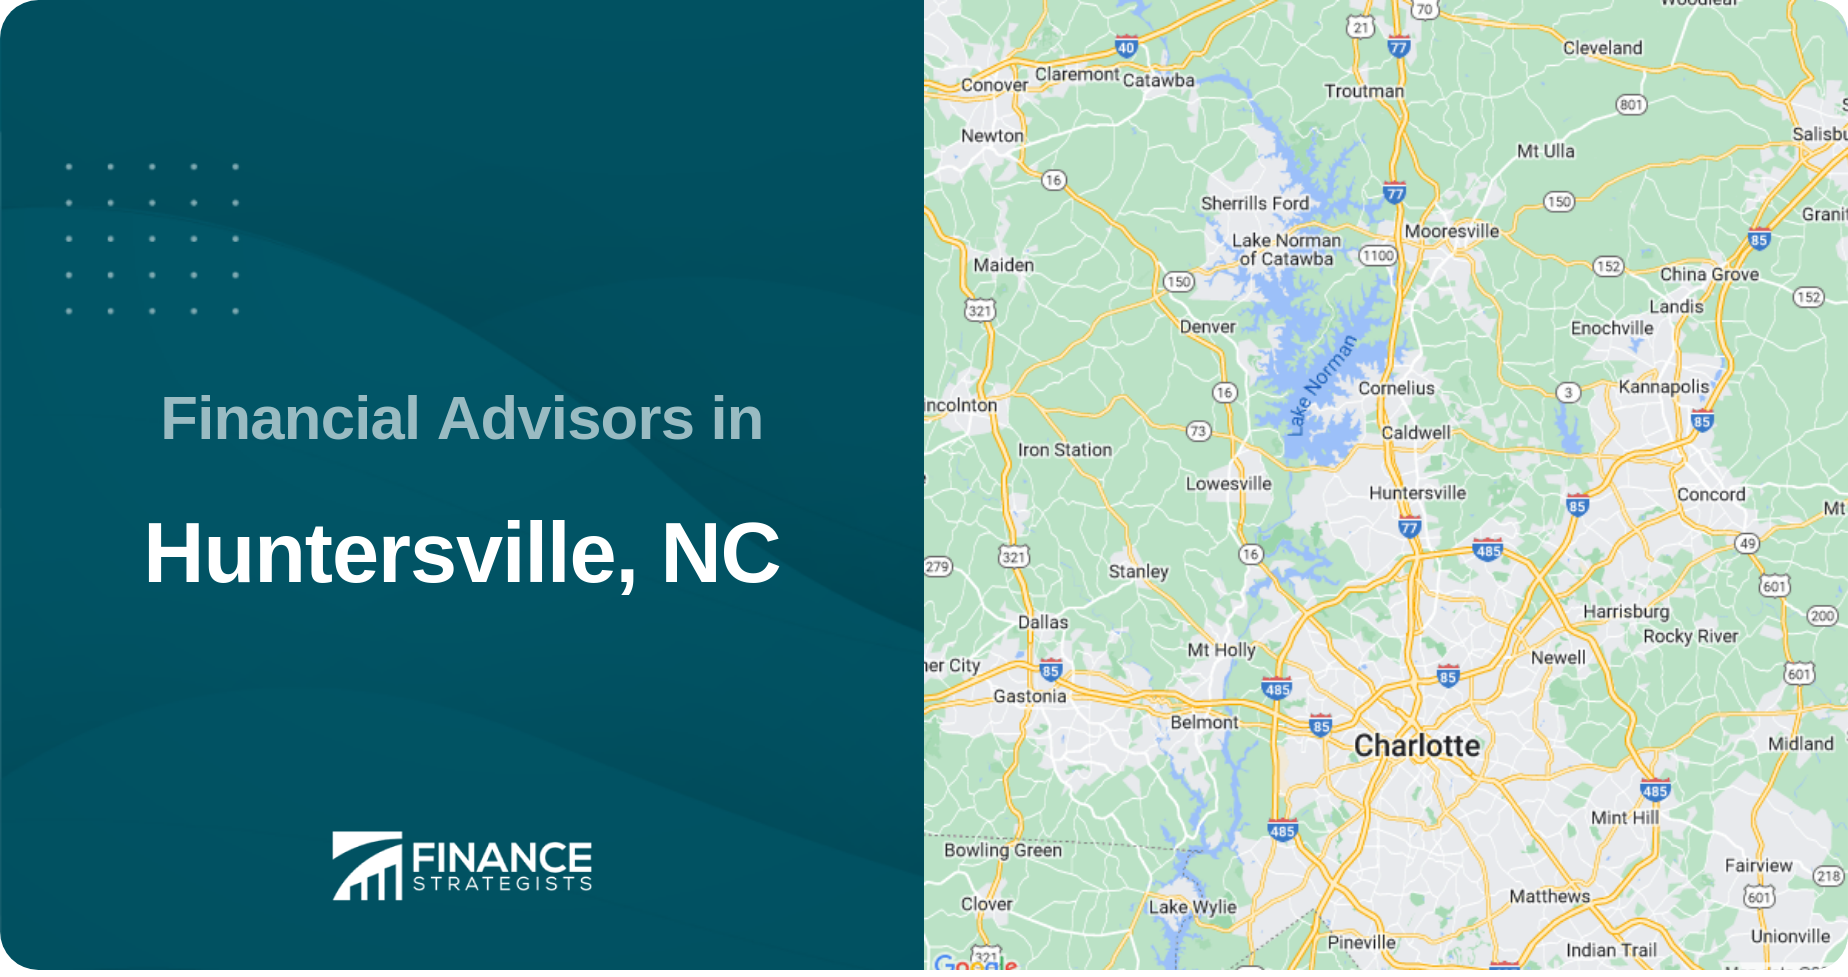 Financial Advisors in Huntersville, NC